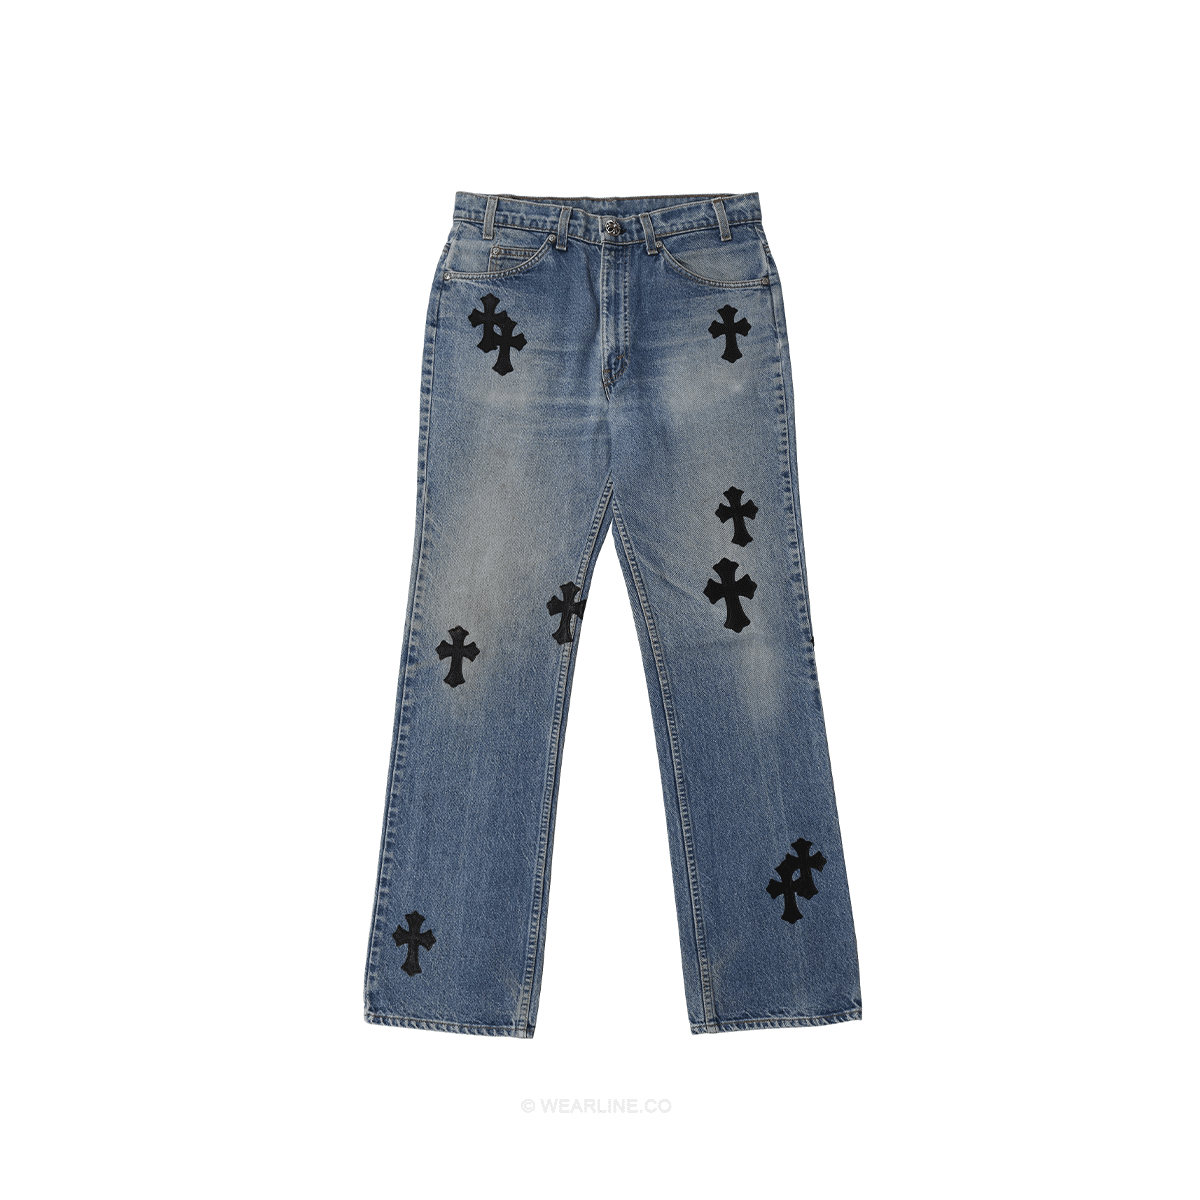 chrome hearts jeans | Dresses Images 2022